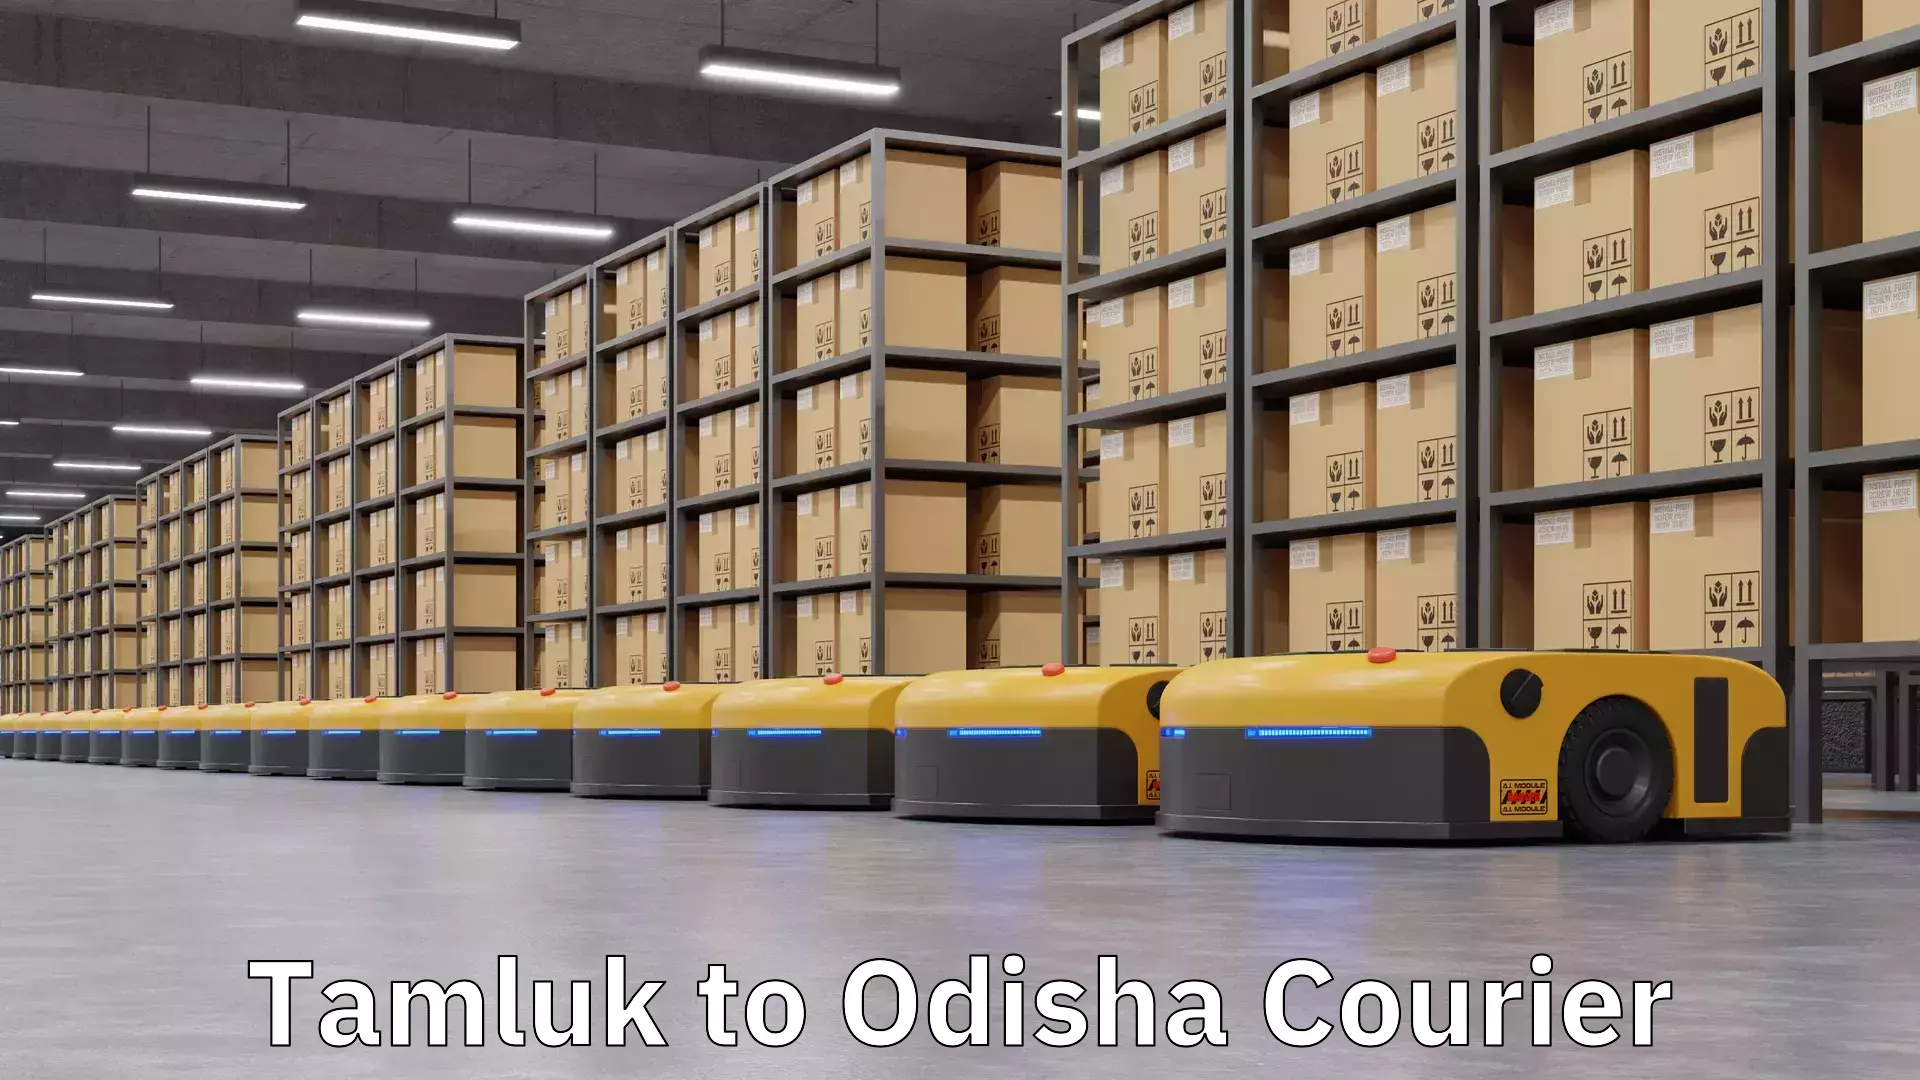 User-friendly delivery service Tamluk to Odisha